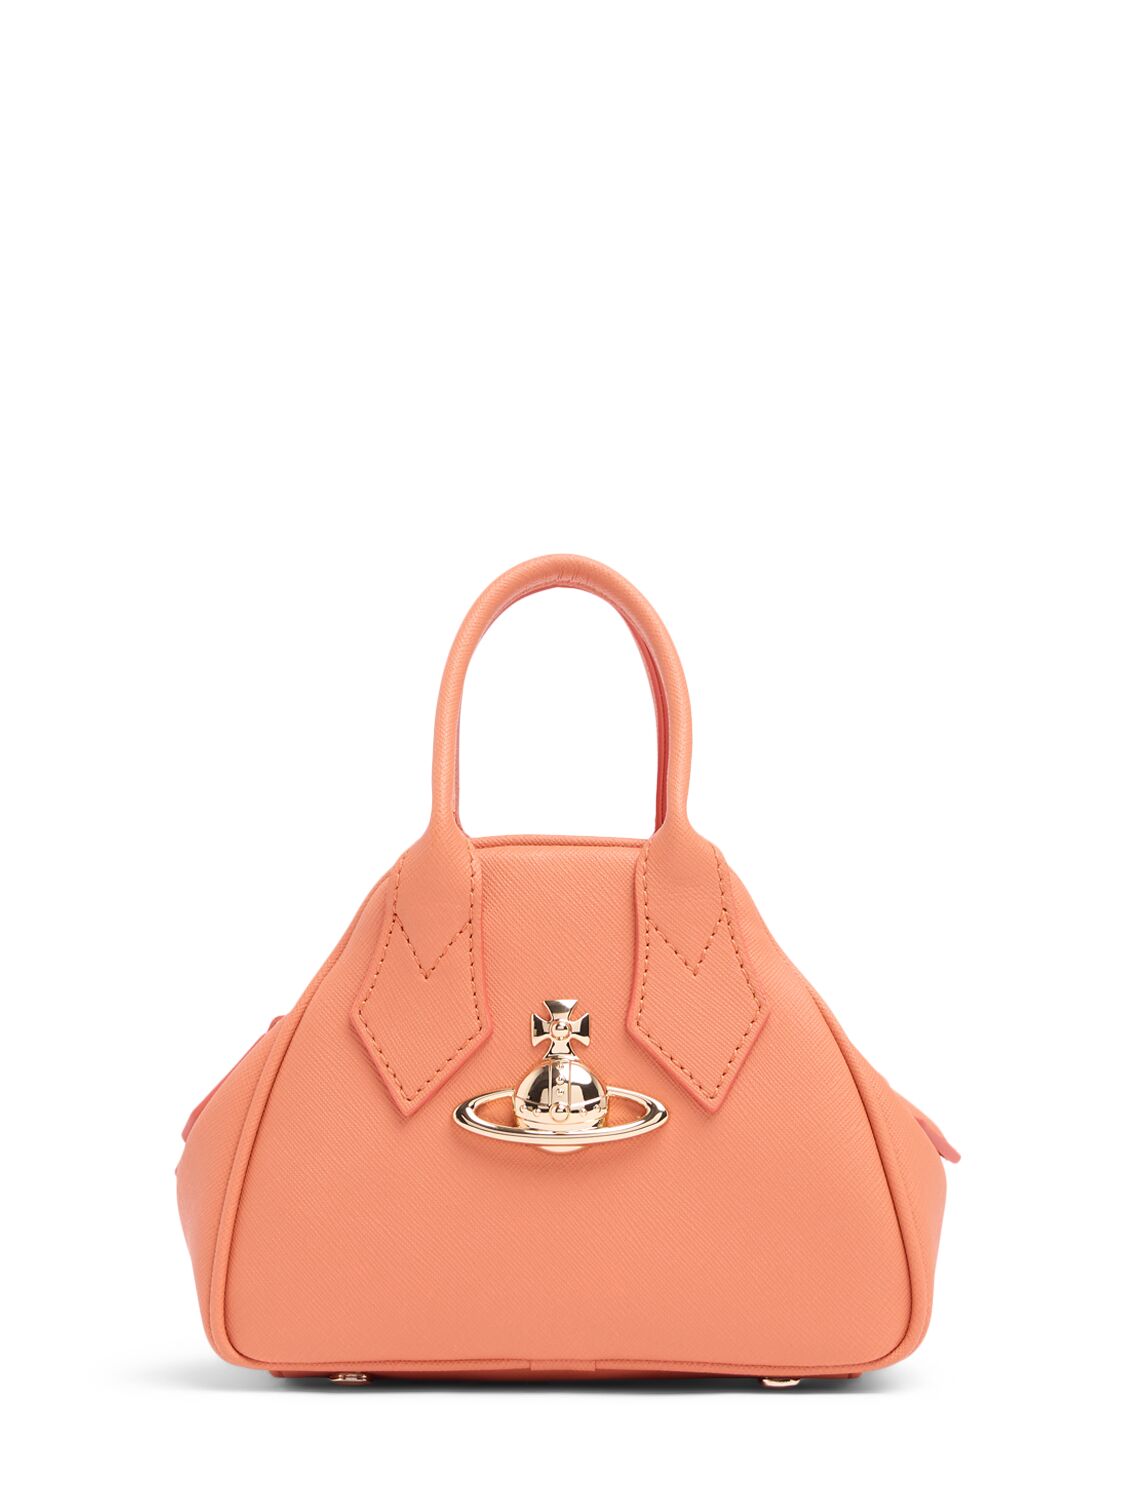 Vivienne Westwood Orange Mini Yasmine Bag